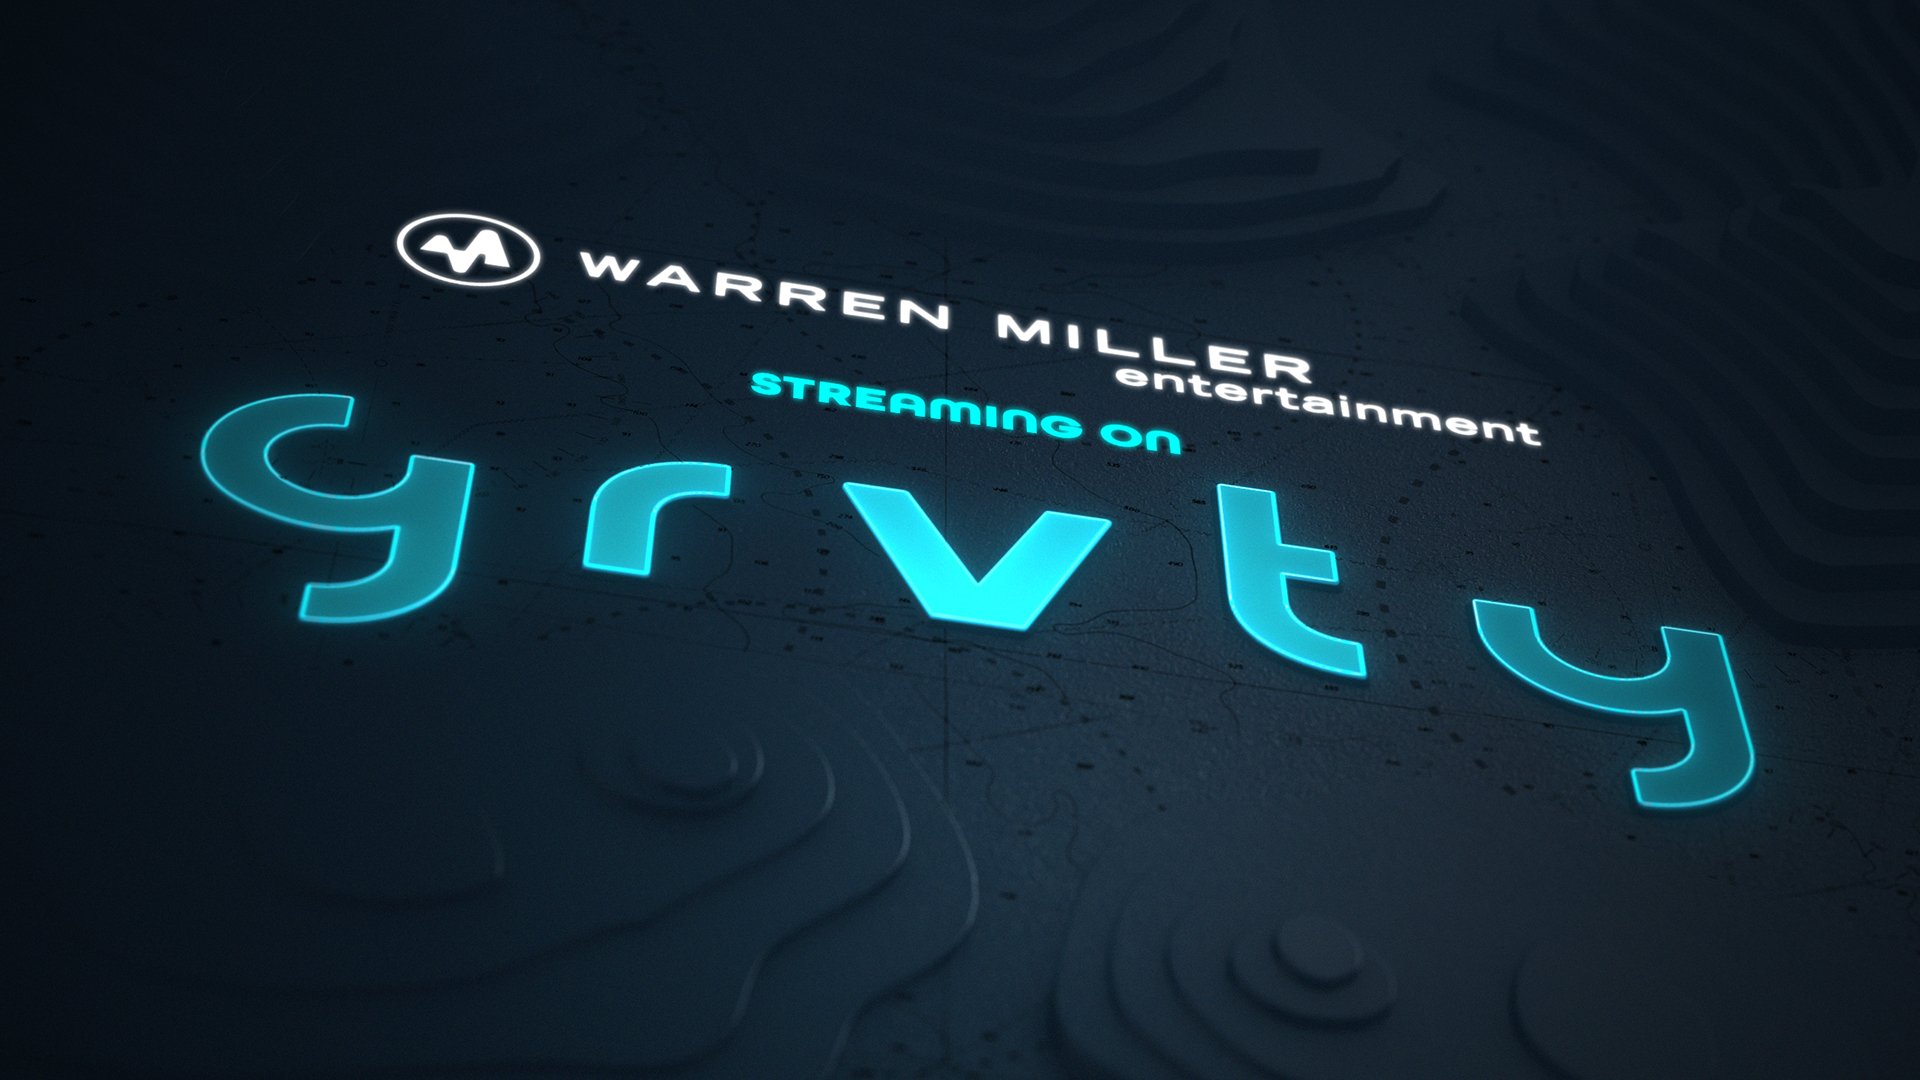 Warren Miller streaming on grvty